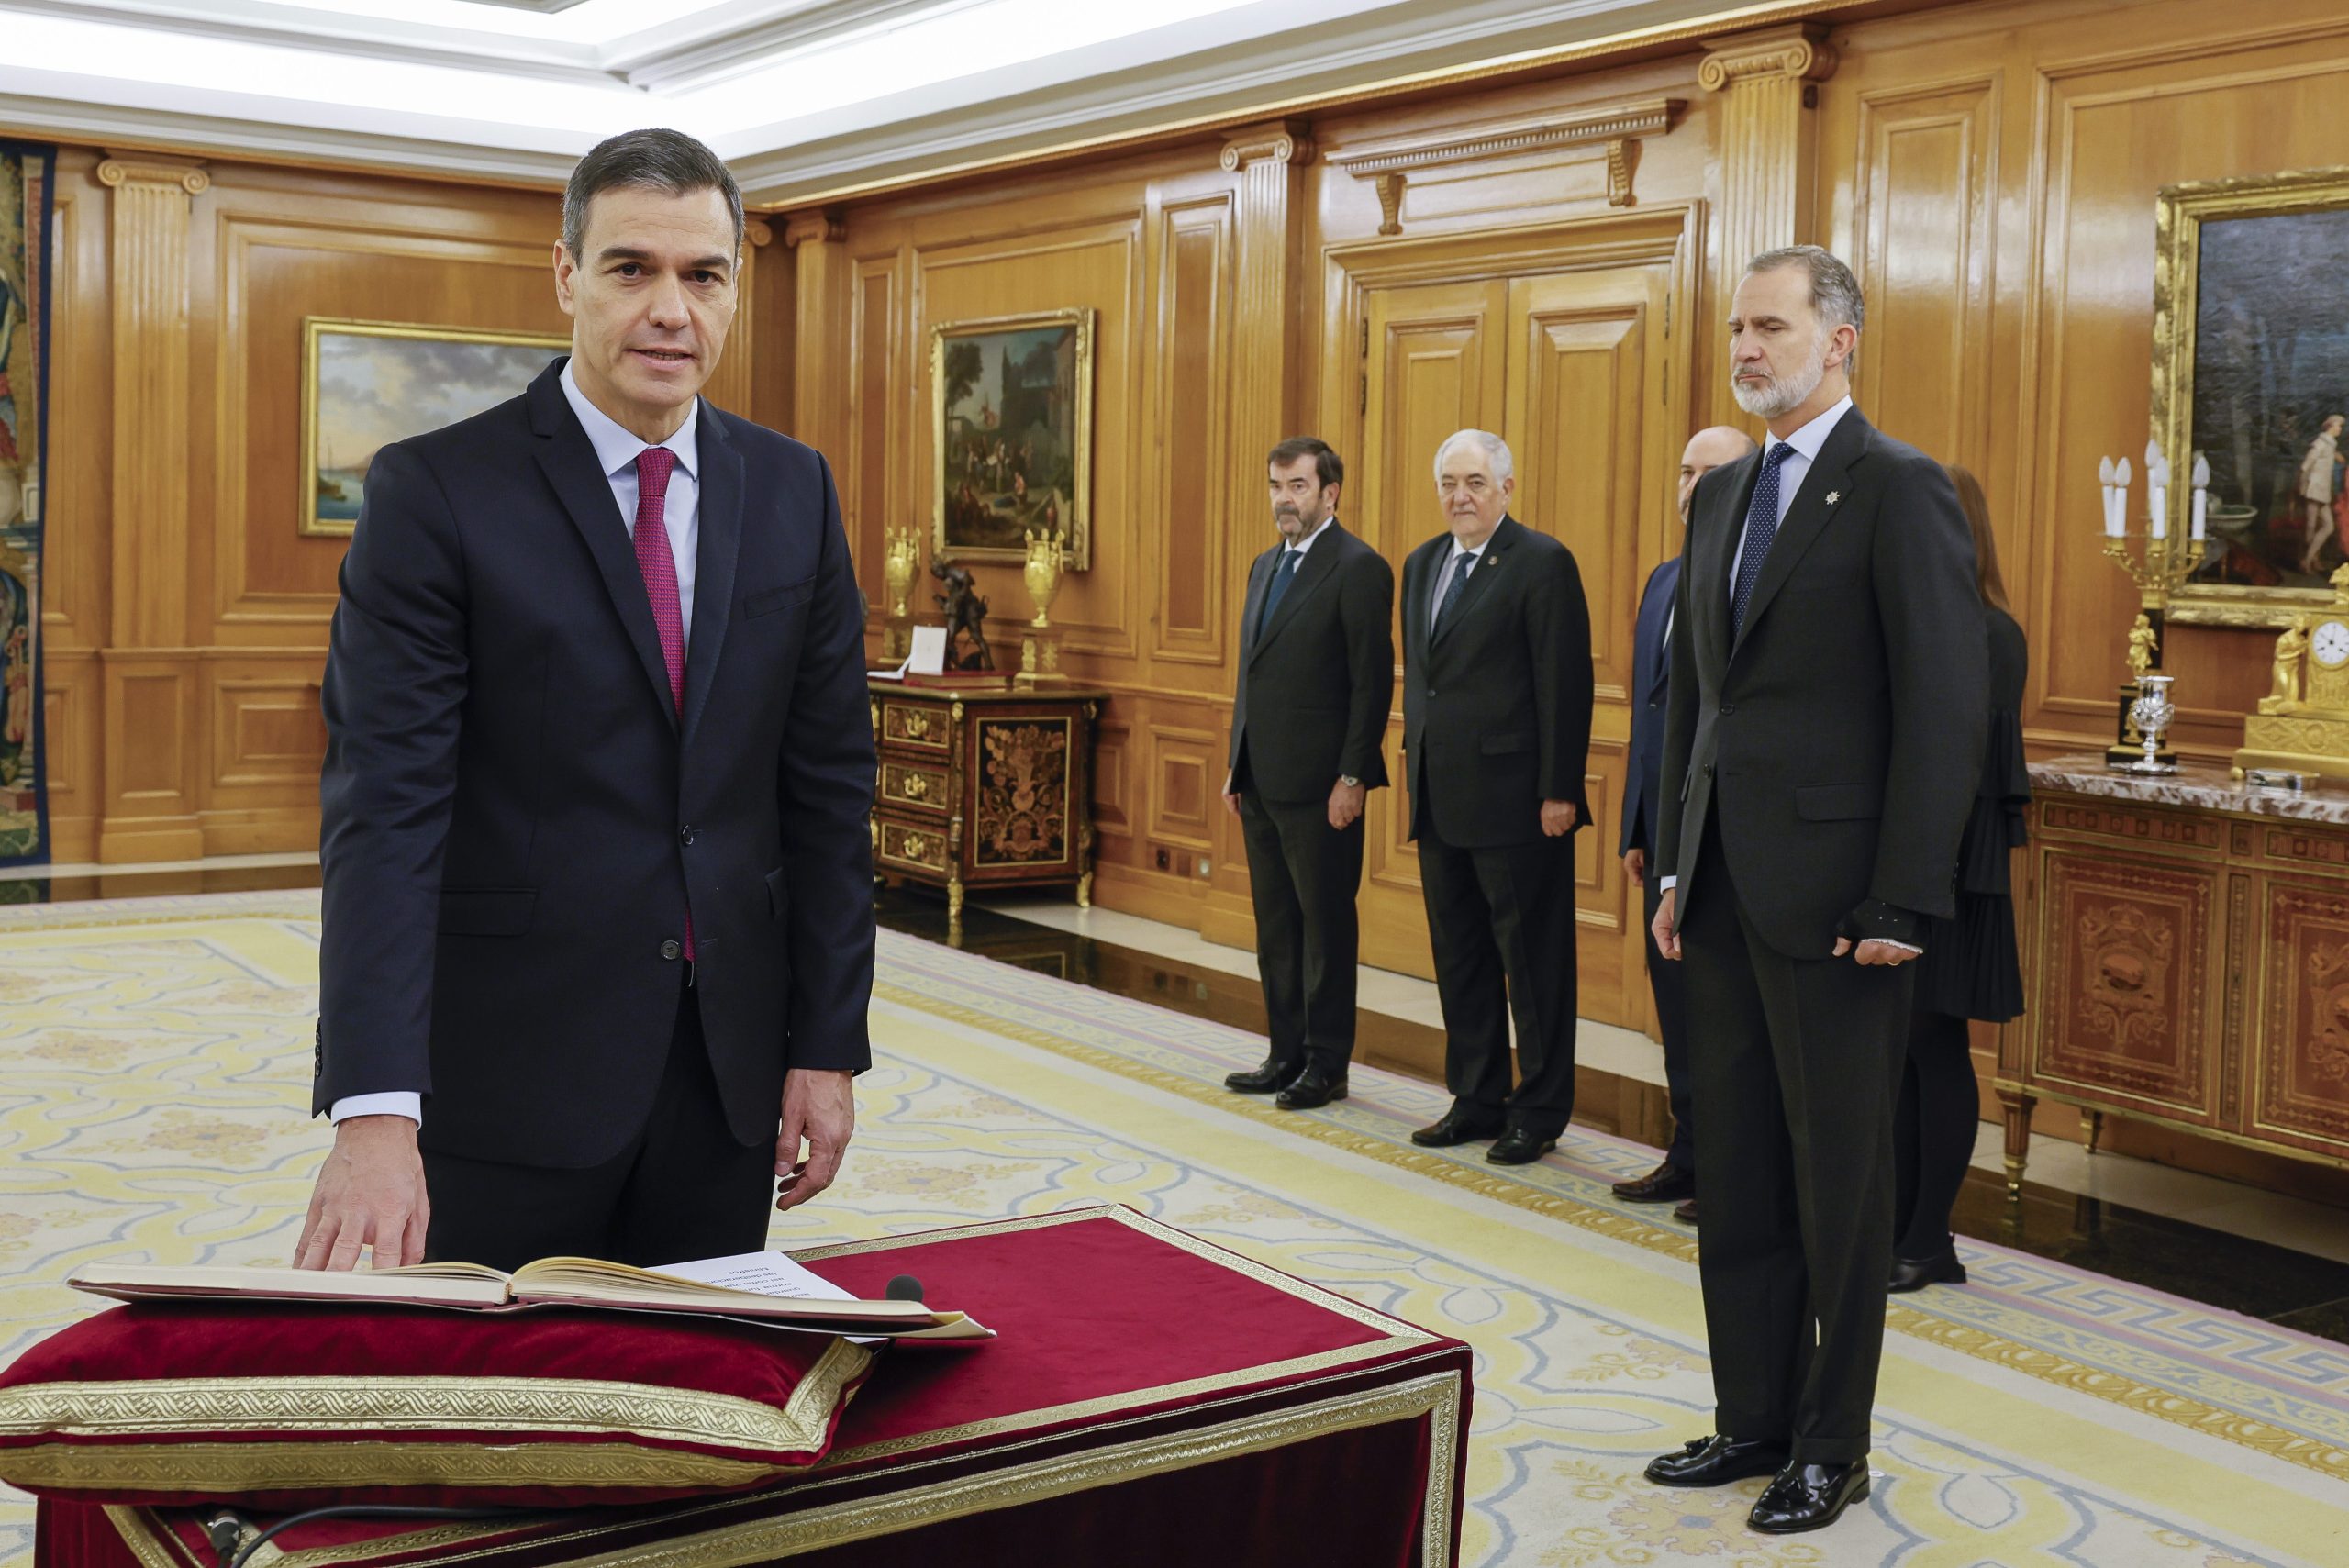 Pedro Sanchez is sworn in as prime minister